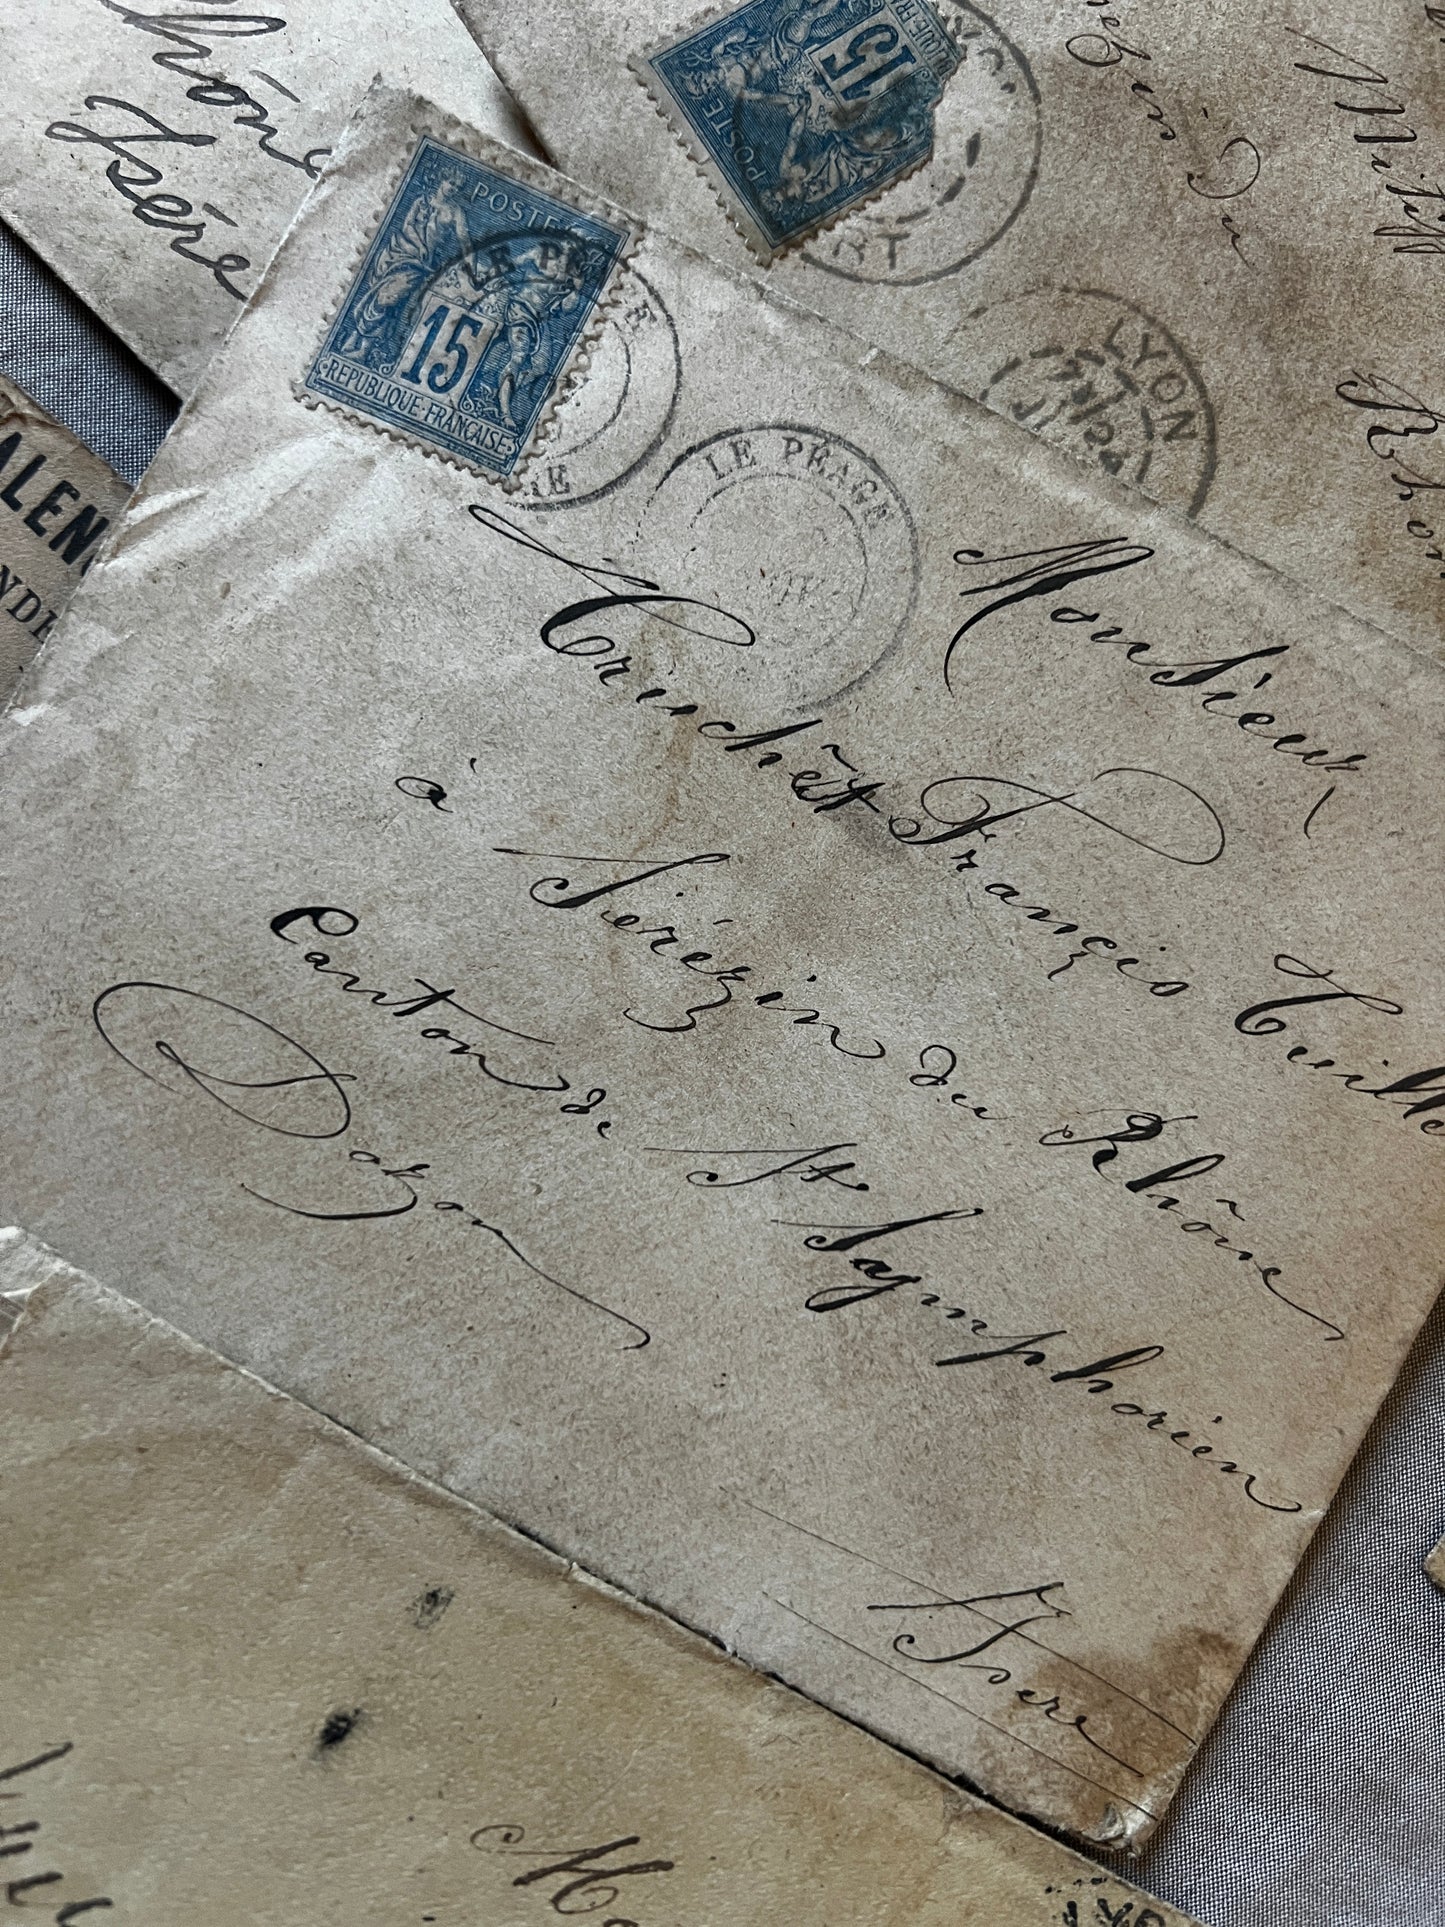 19世紀の手紙束(封筒)